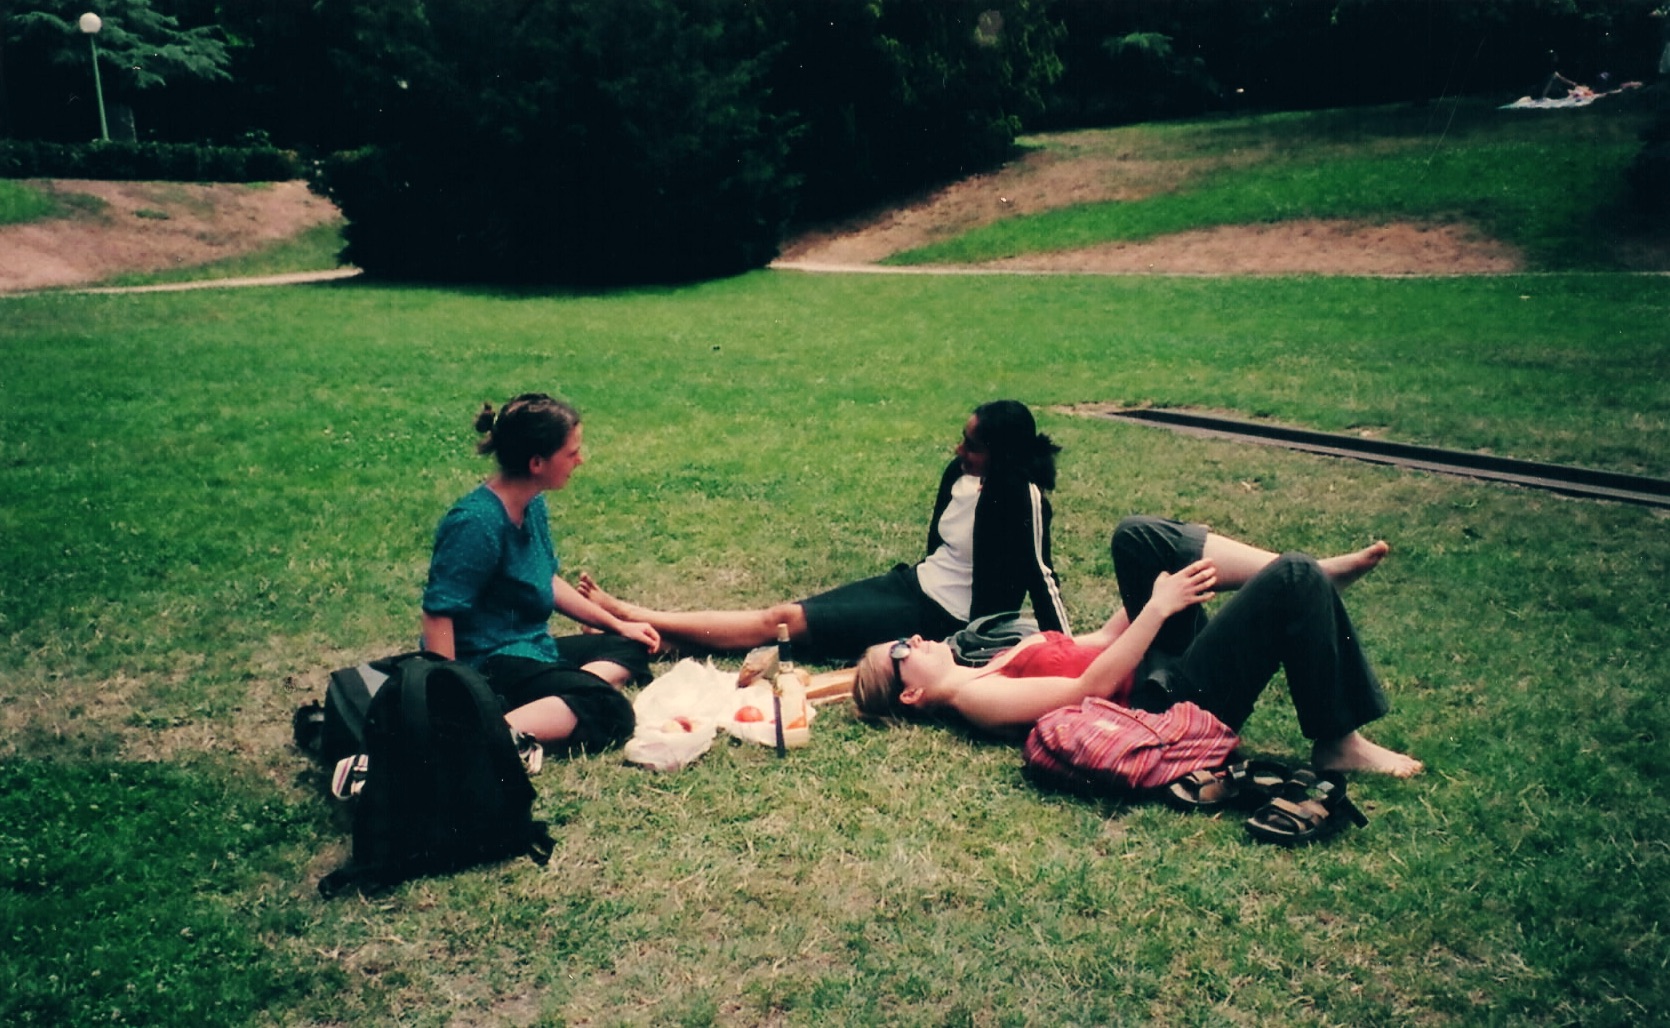   A wonderful lazy day with friends in the&nbsp;  Parc de la Tête d'Or&nbsp;  in Lyon.  